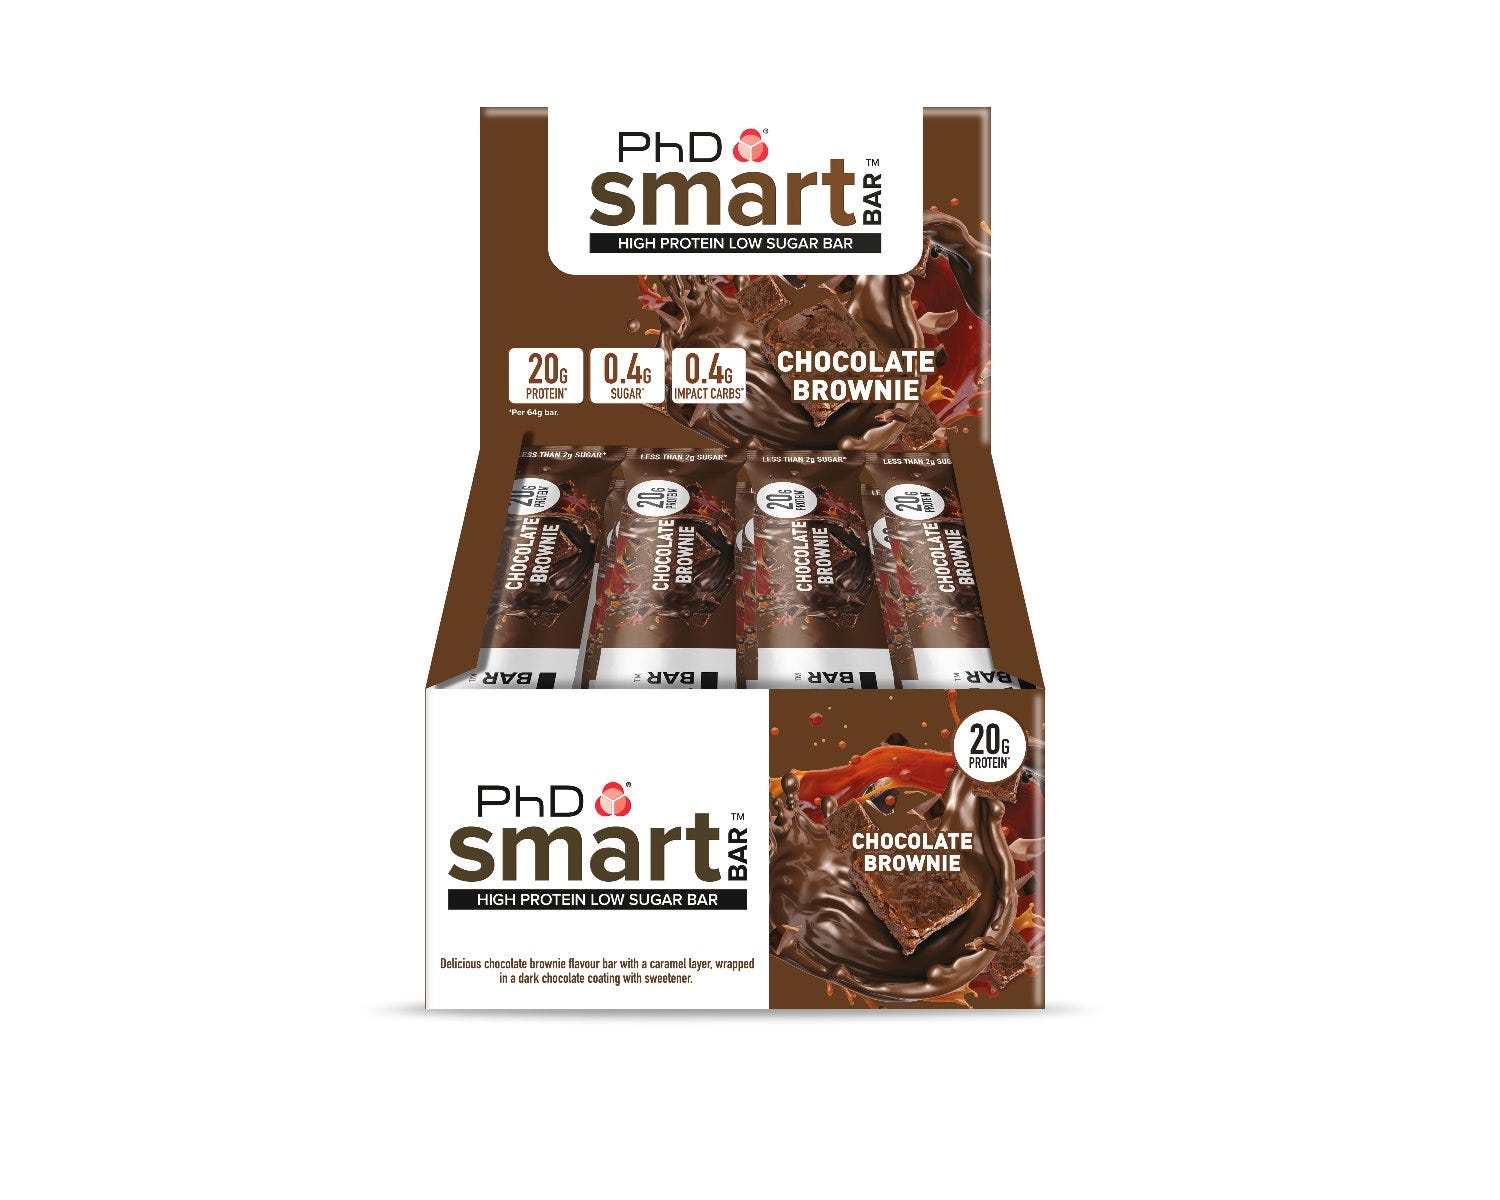 PHD Smart Bar – Dark Chocolate Brownie Review